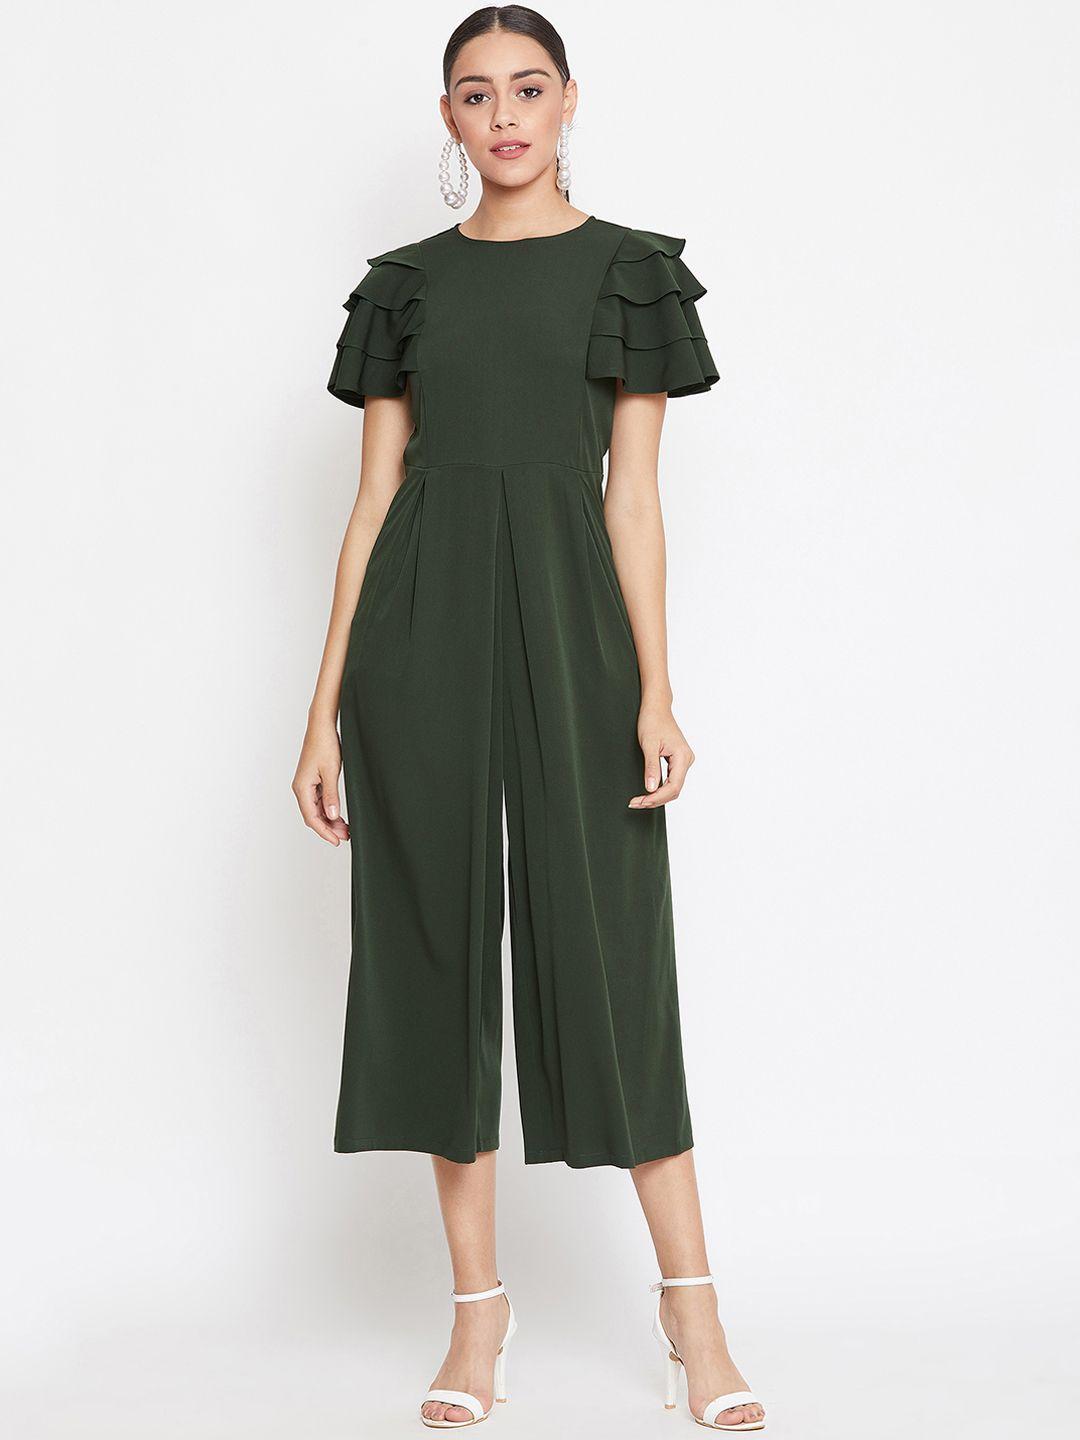 uptownie lite women olive green solid culotte jumpsuit